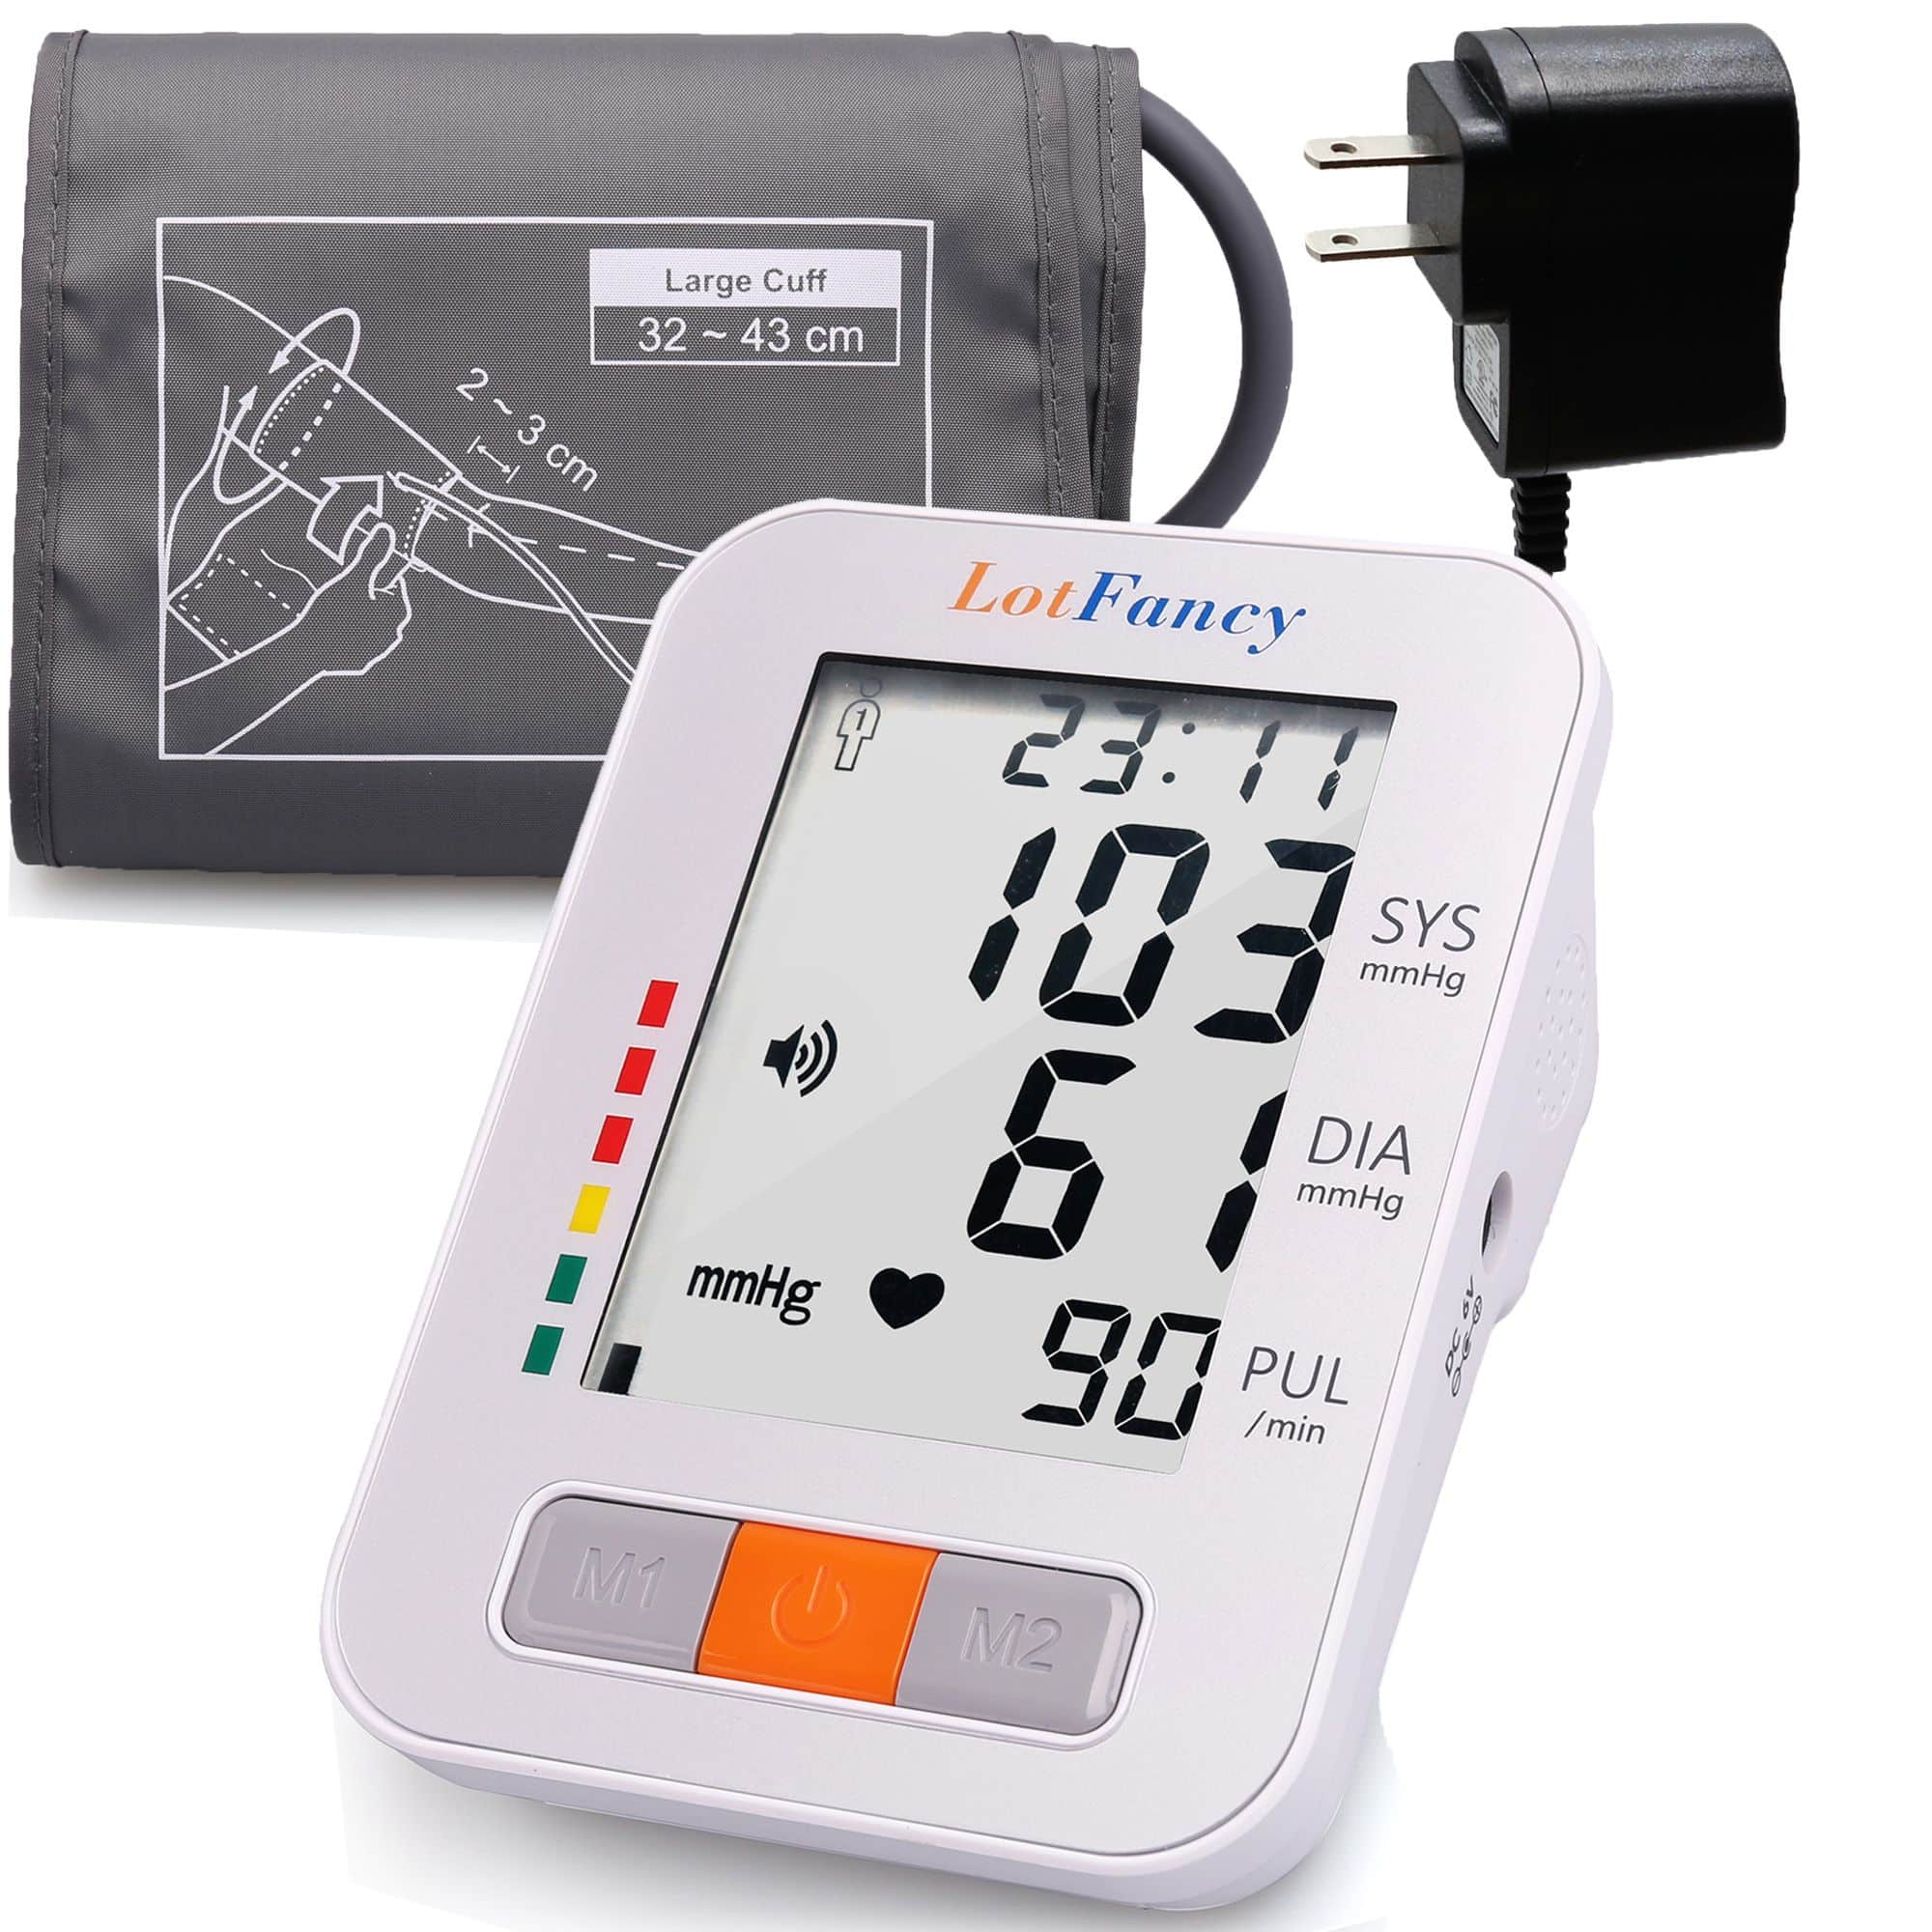 Upper Arm Blood Pressure Monitor,Large Cuff (13